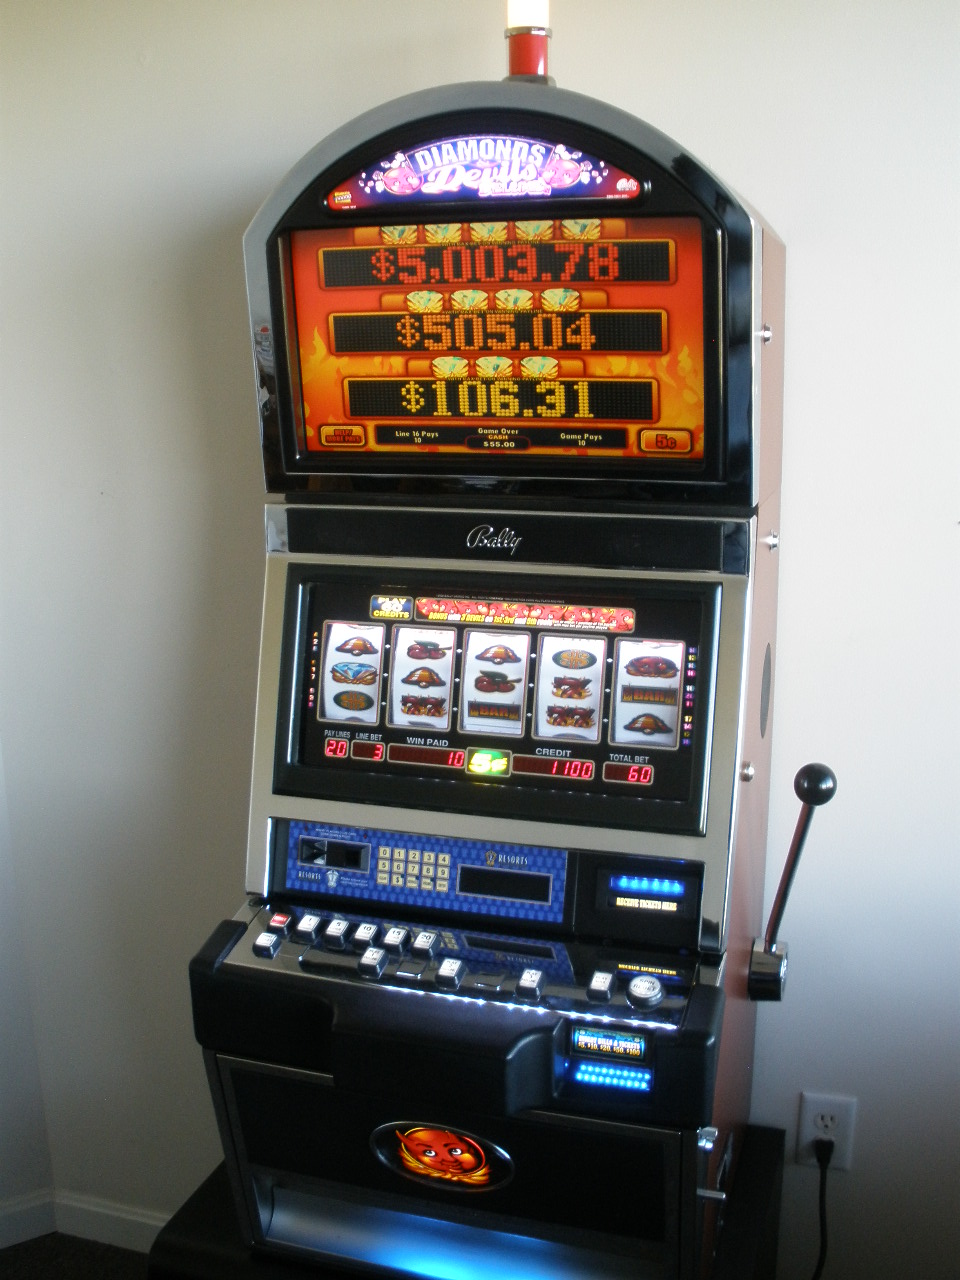 Cave king slot machine